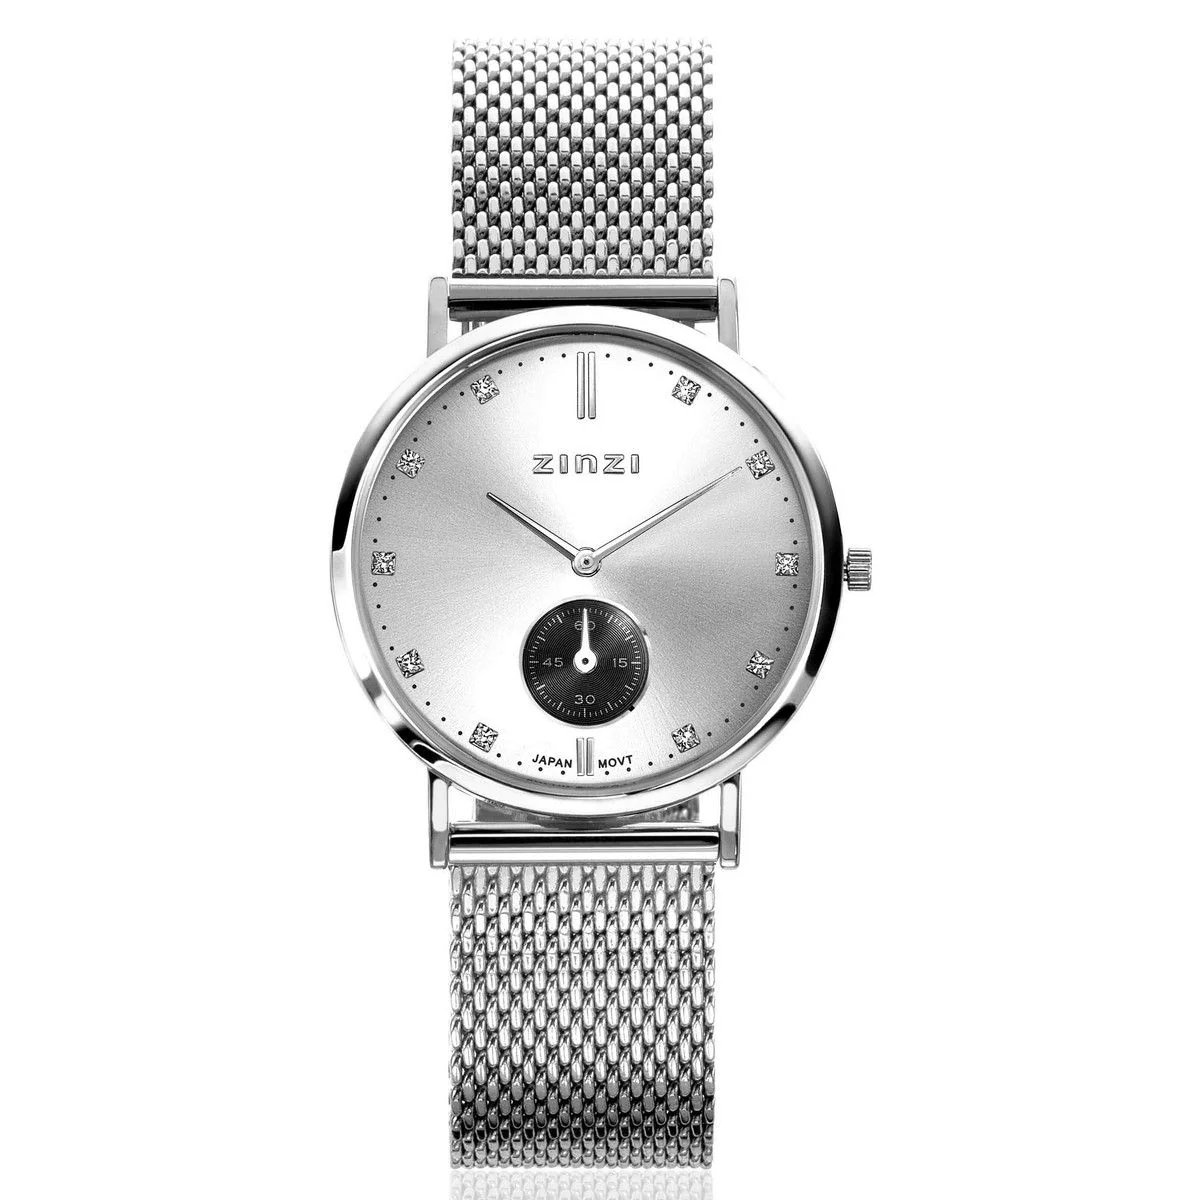 Zinzi Glam Silver horloge ZIW539M + gratis armband t.w.v. 29,95